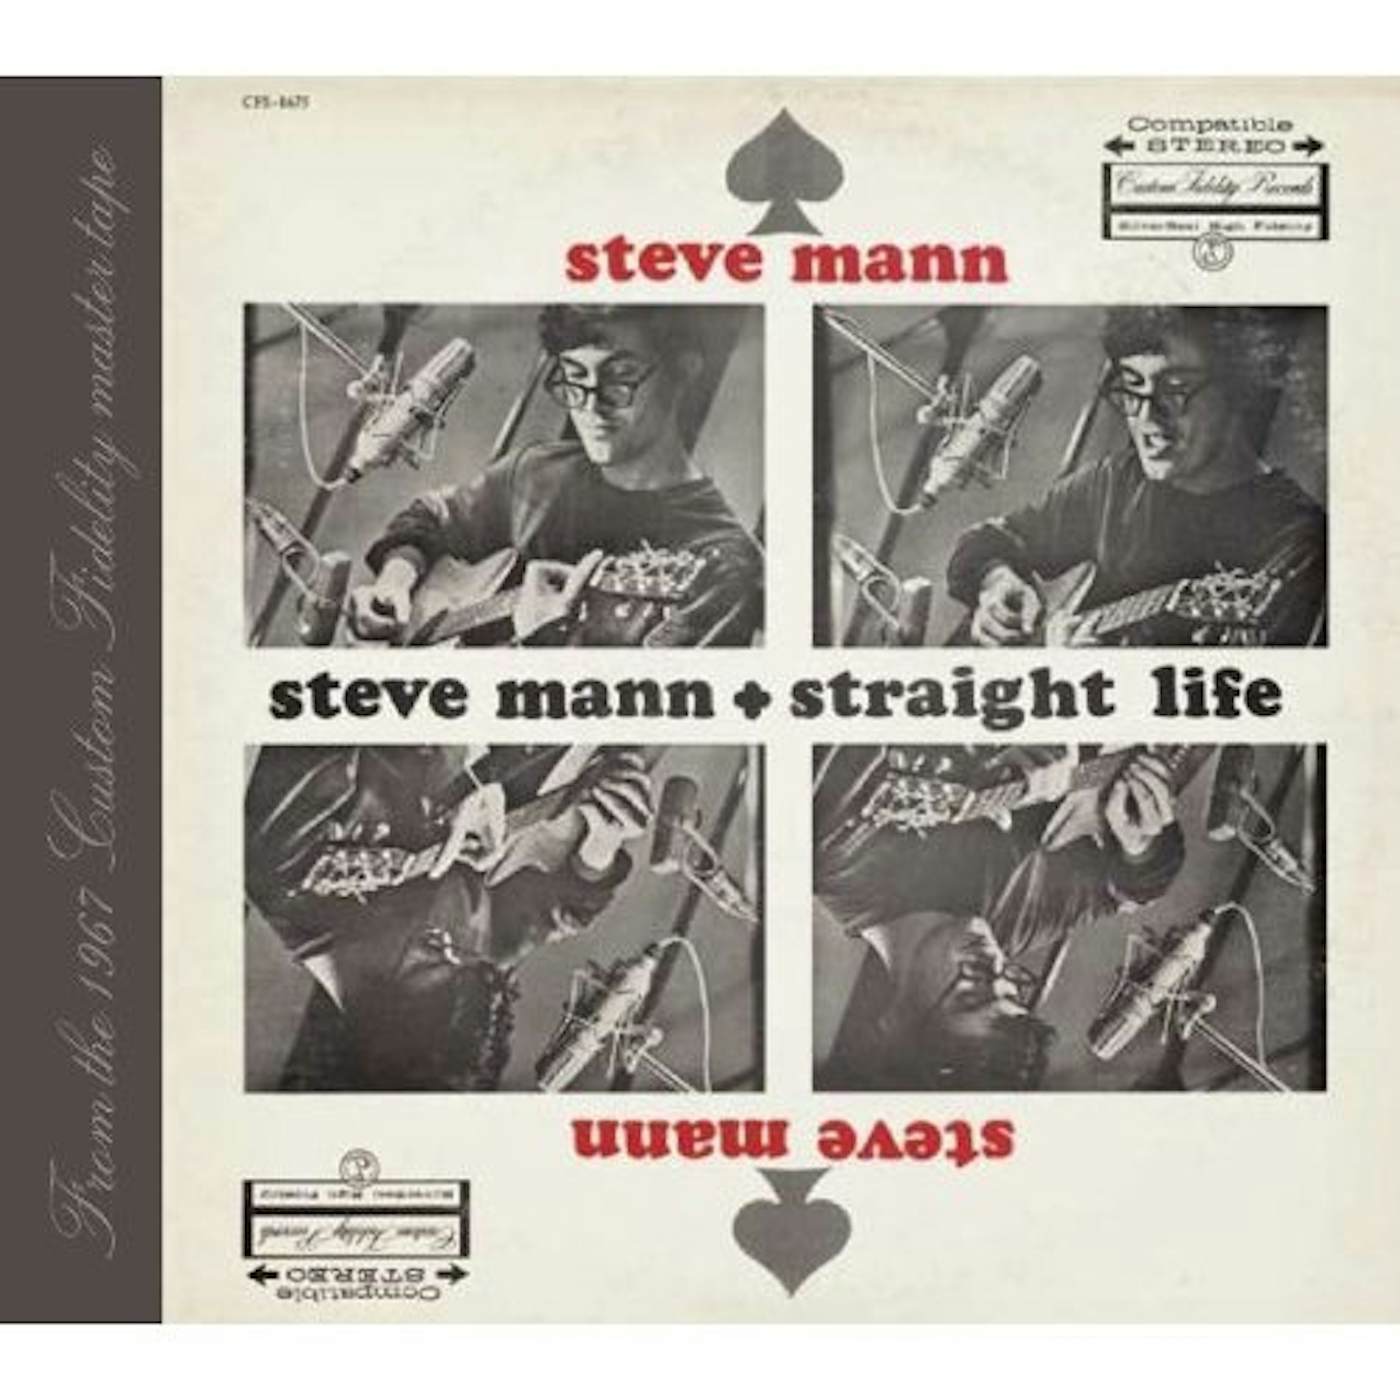 Steve Mann STRAIGHT LIFE CD